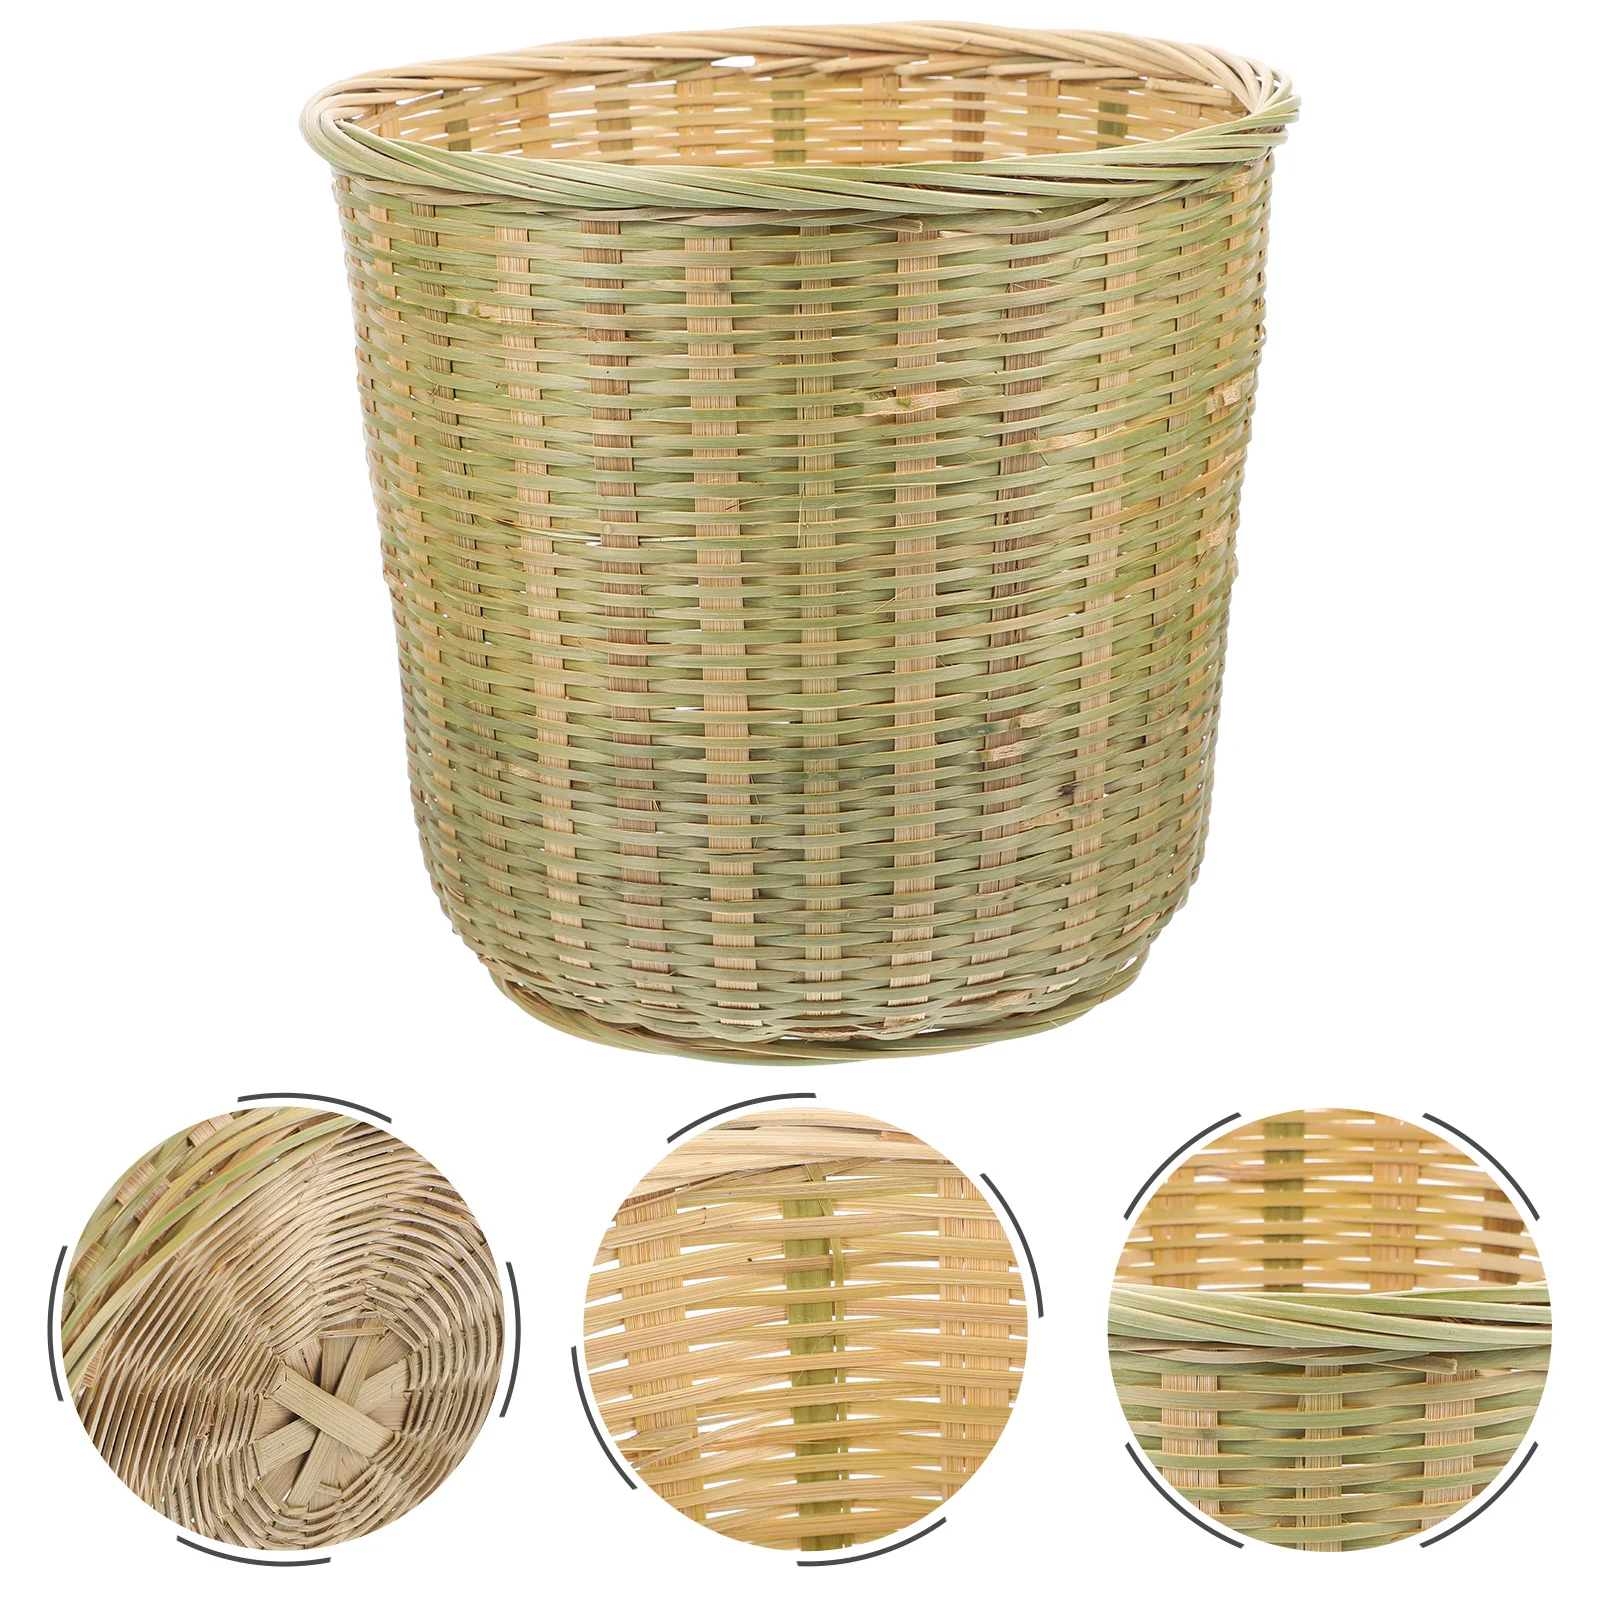 

Basket Waste Storage Woven Trash Wicker Can Bin Baskets Rattan Seagrass Garbage Kitchen Planter Laundry Organizer Bedroom Cans